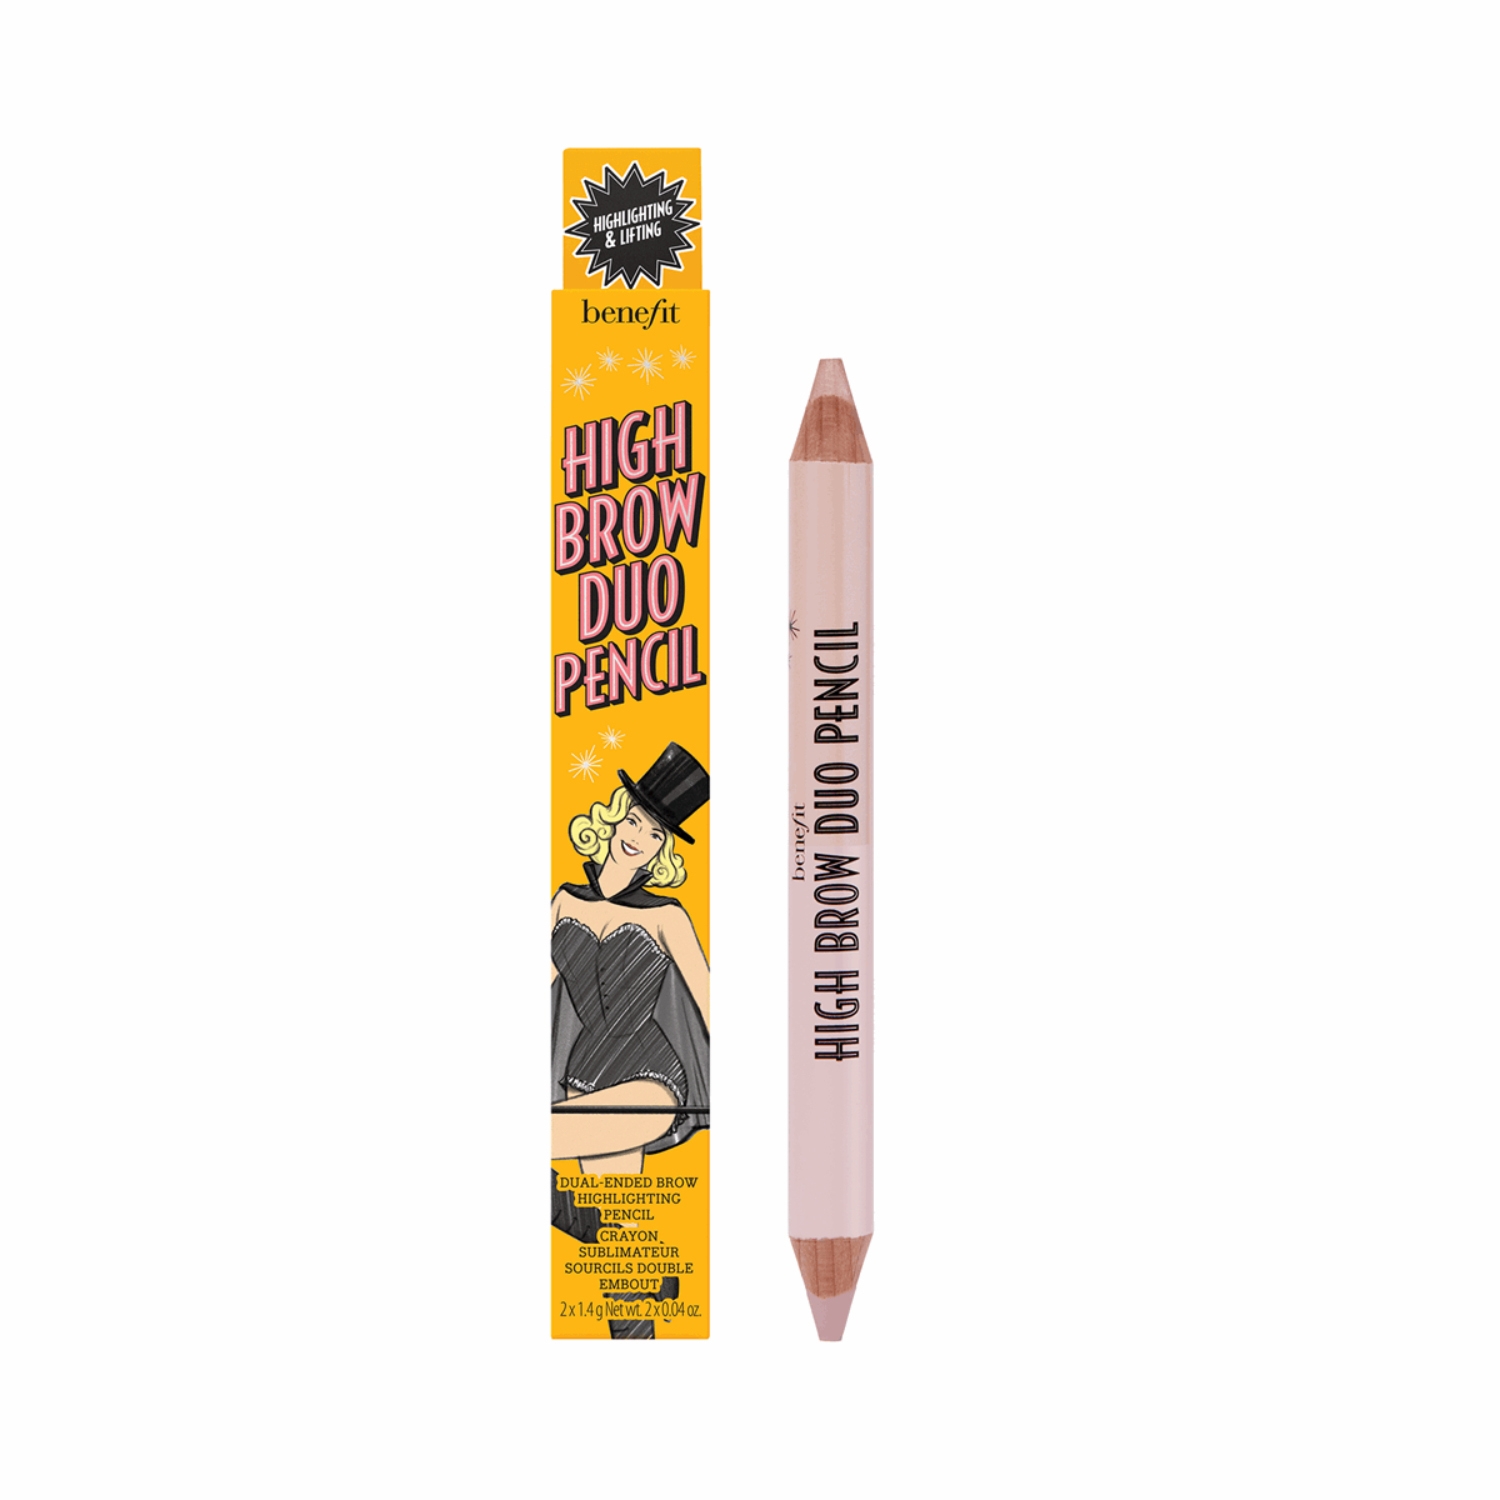 Benefit Cosmetics High Brow Duo Pencil Set - Linen Pink and Soft Gold (2 pcs)